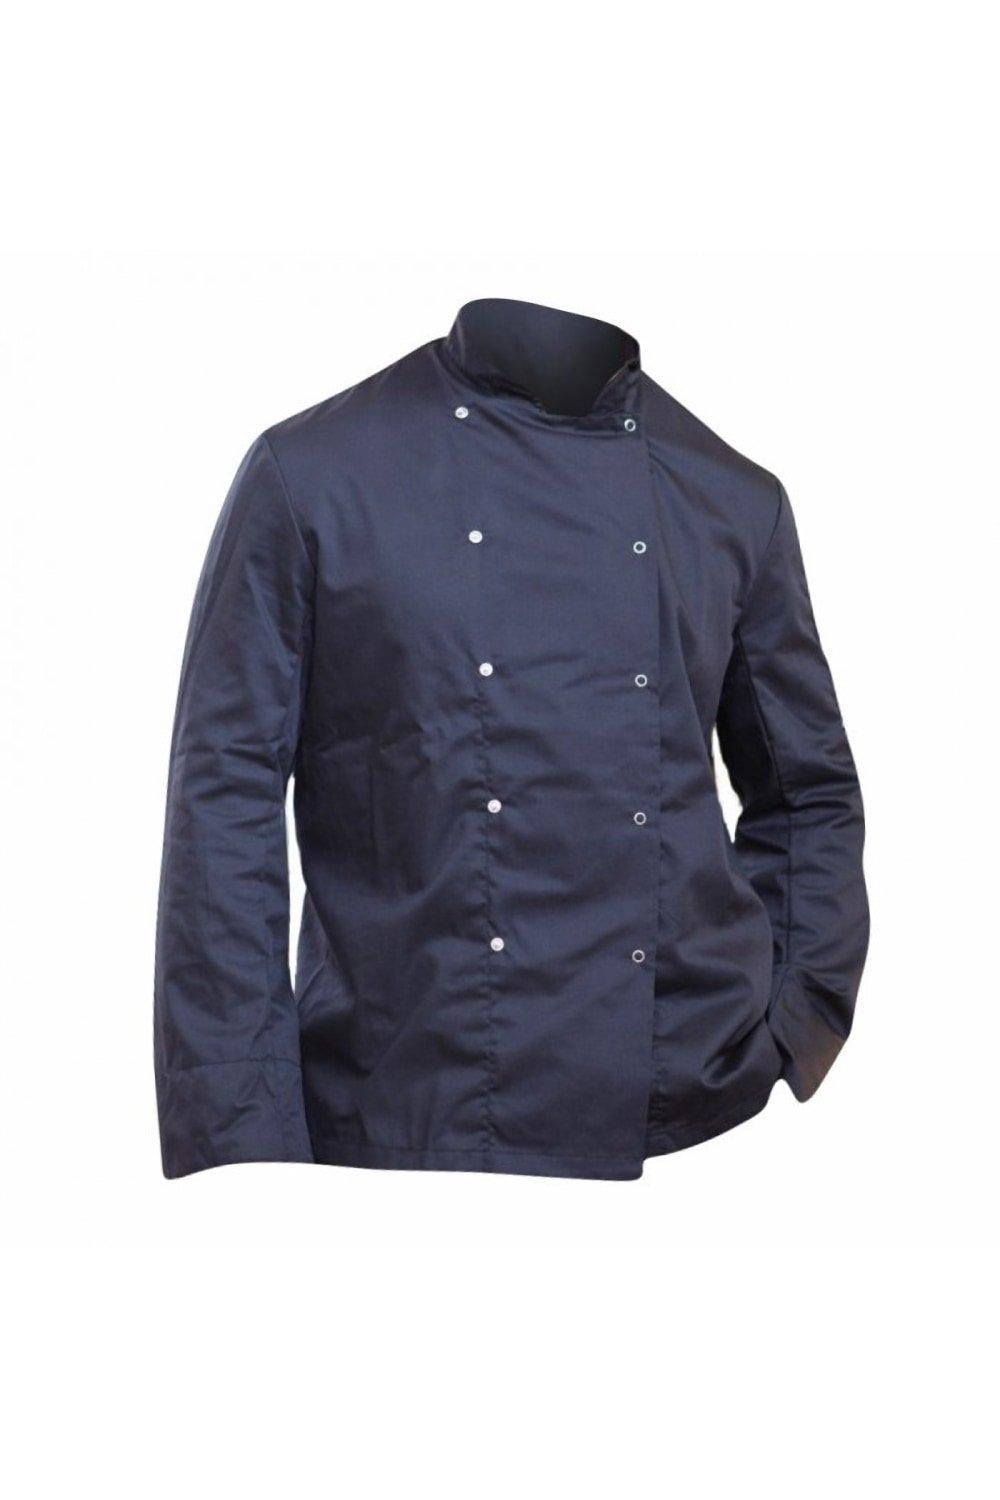 Economy Long Sleeve Chefs Jacket Chefswear